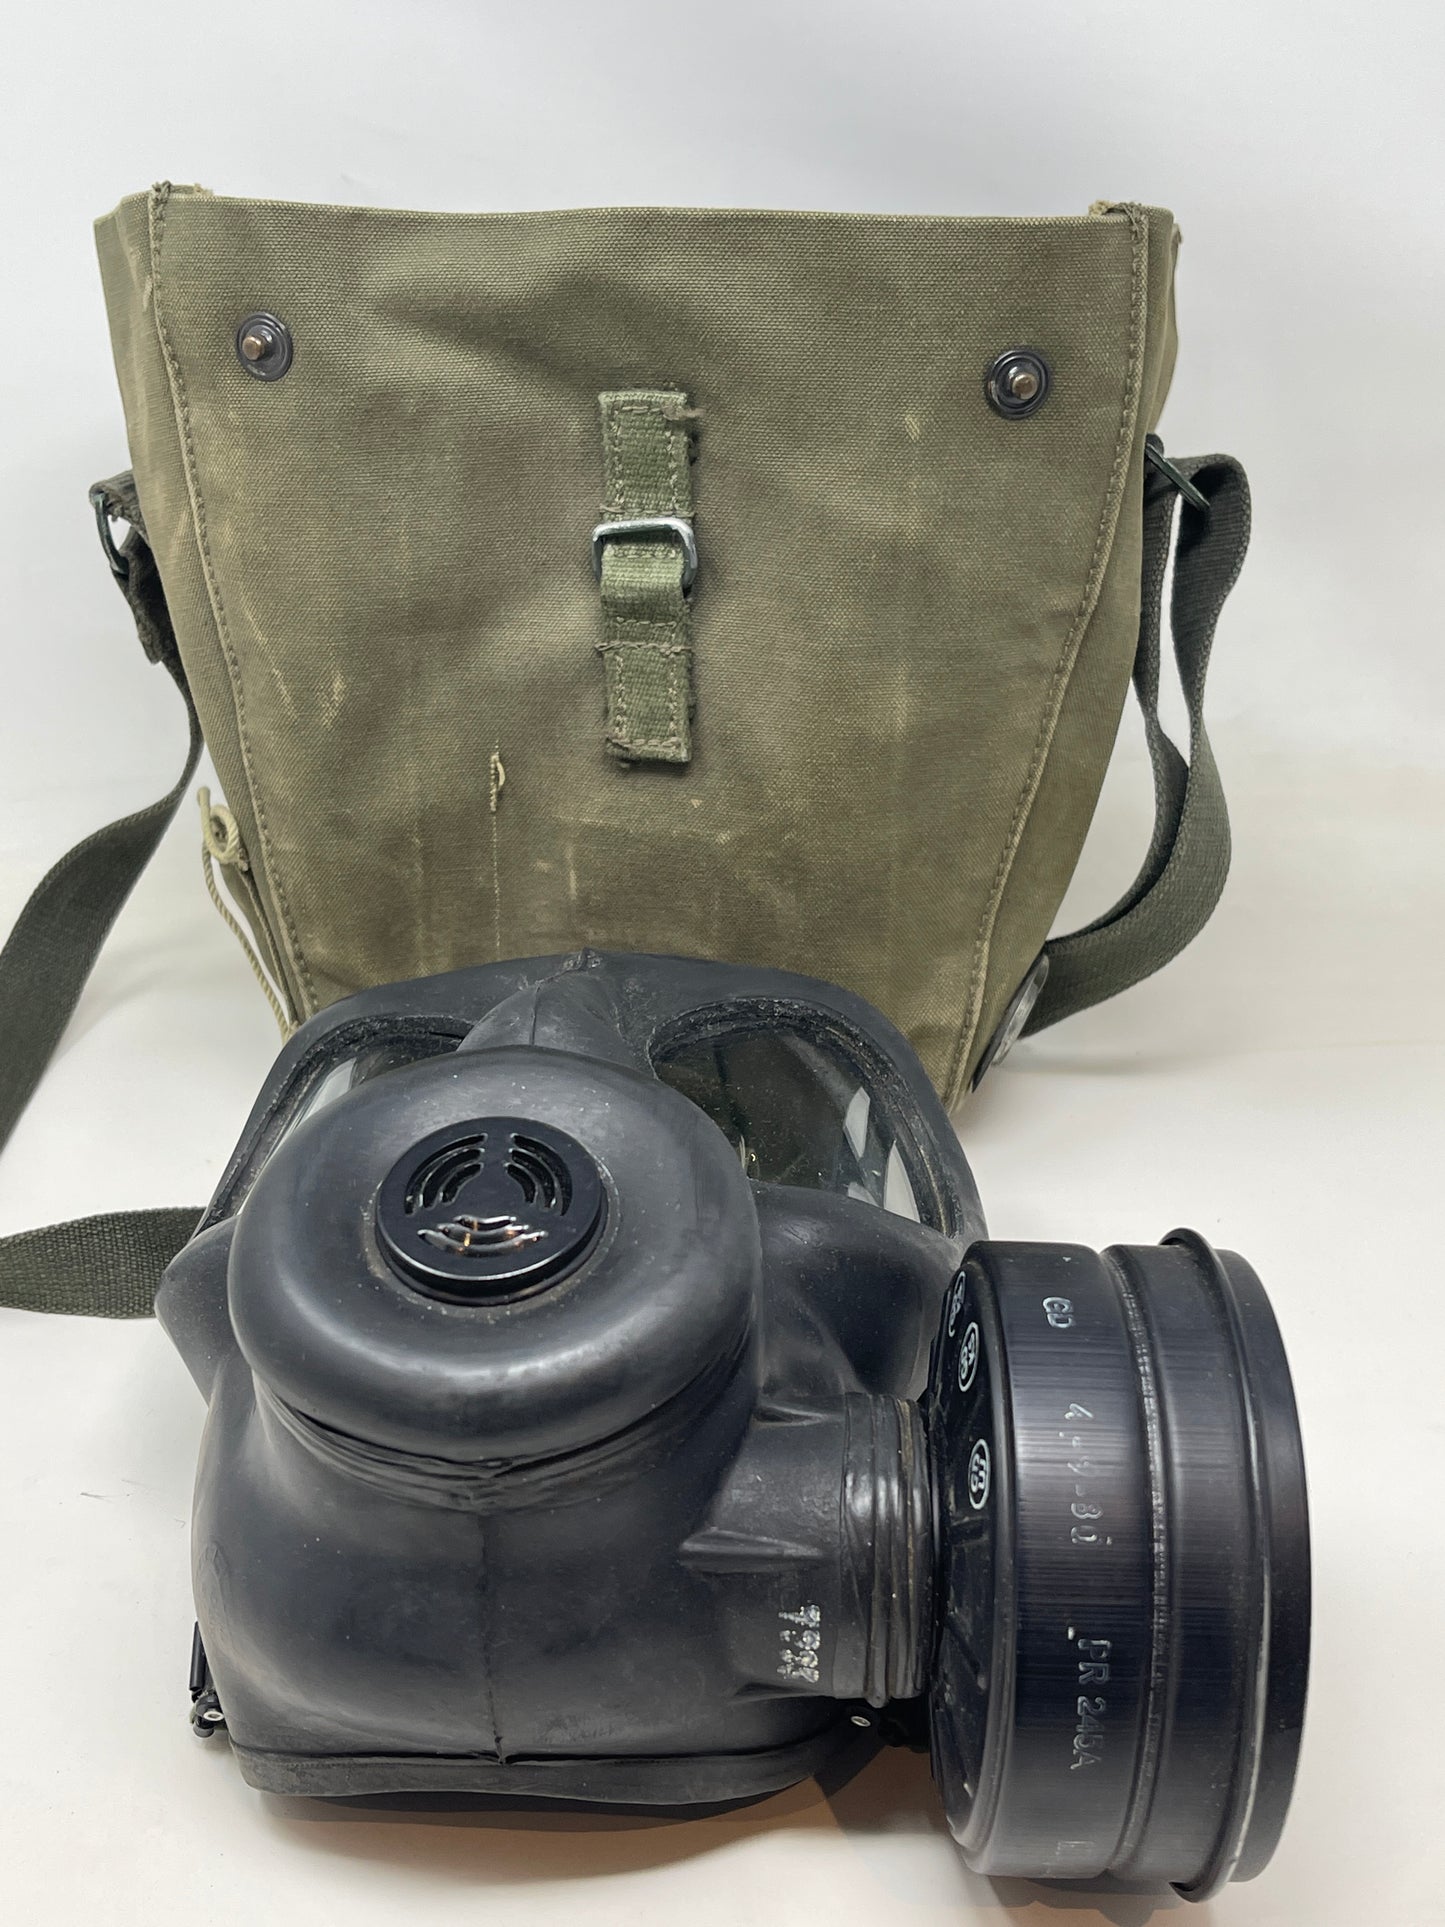 1960's British Army S6 Gas Mask & Haversack showing S6 respirator next to bag